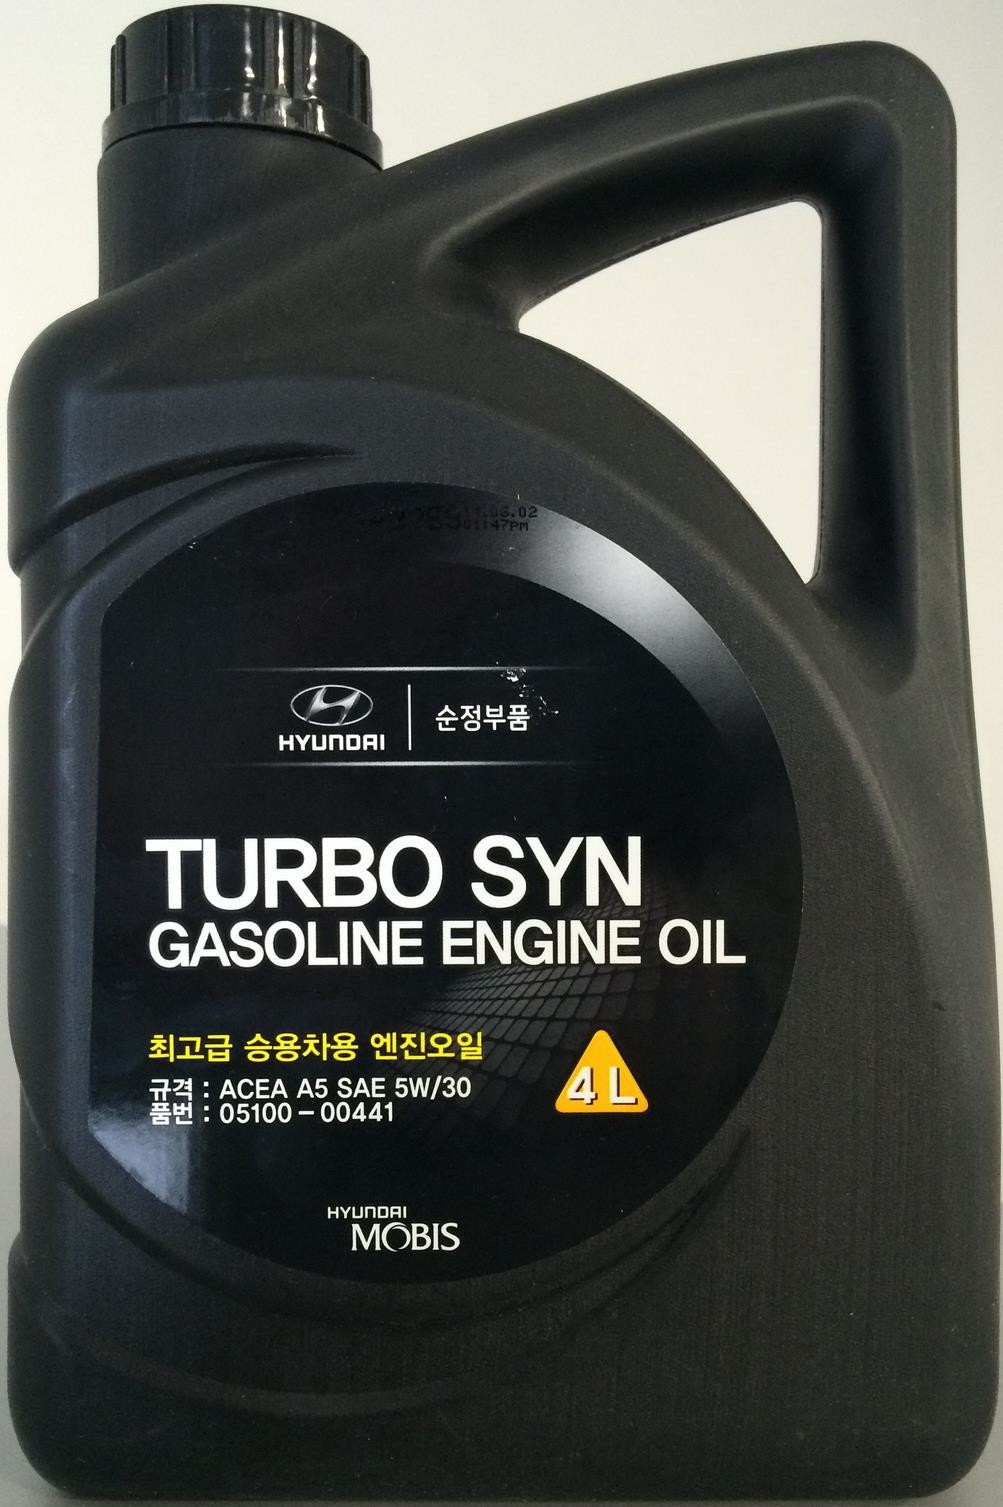 Hyundai turbo syn sae 5w-30 sm/gf-4, 4л